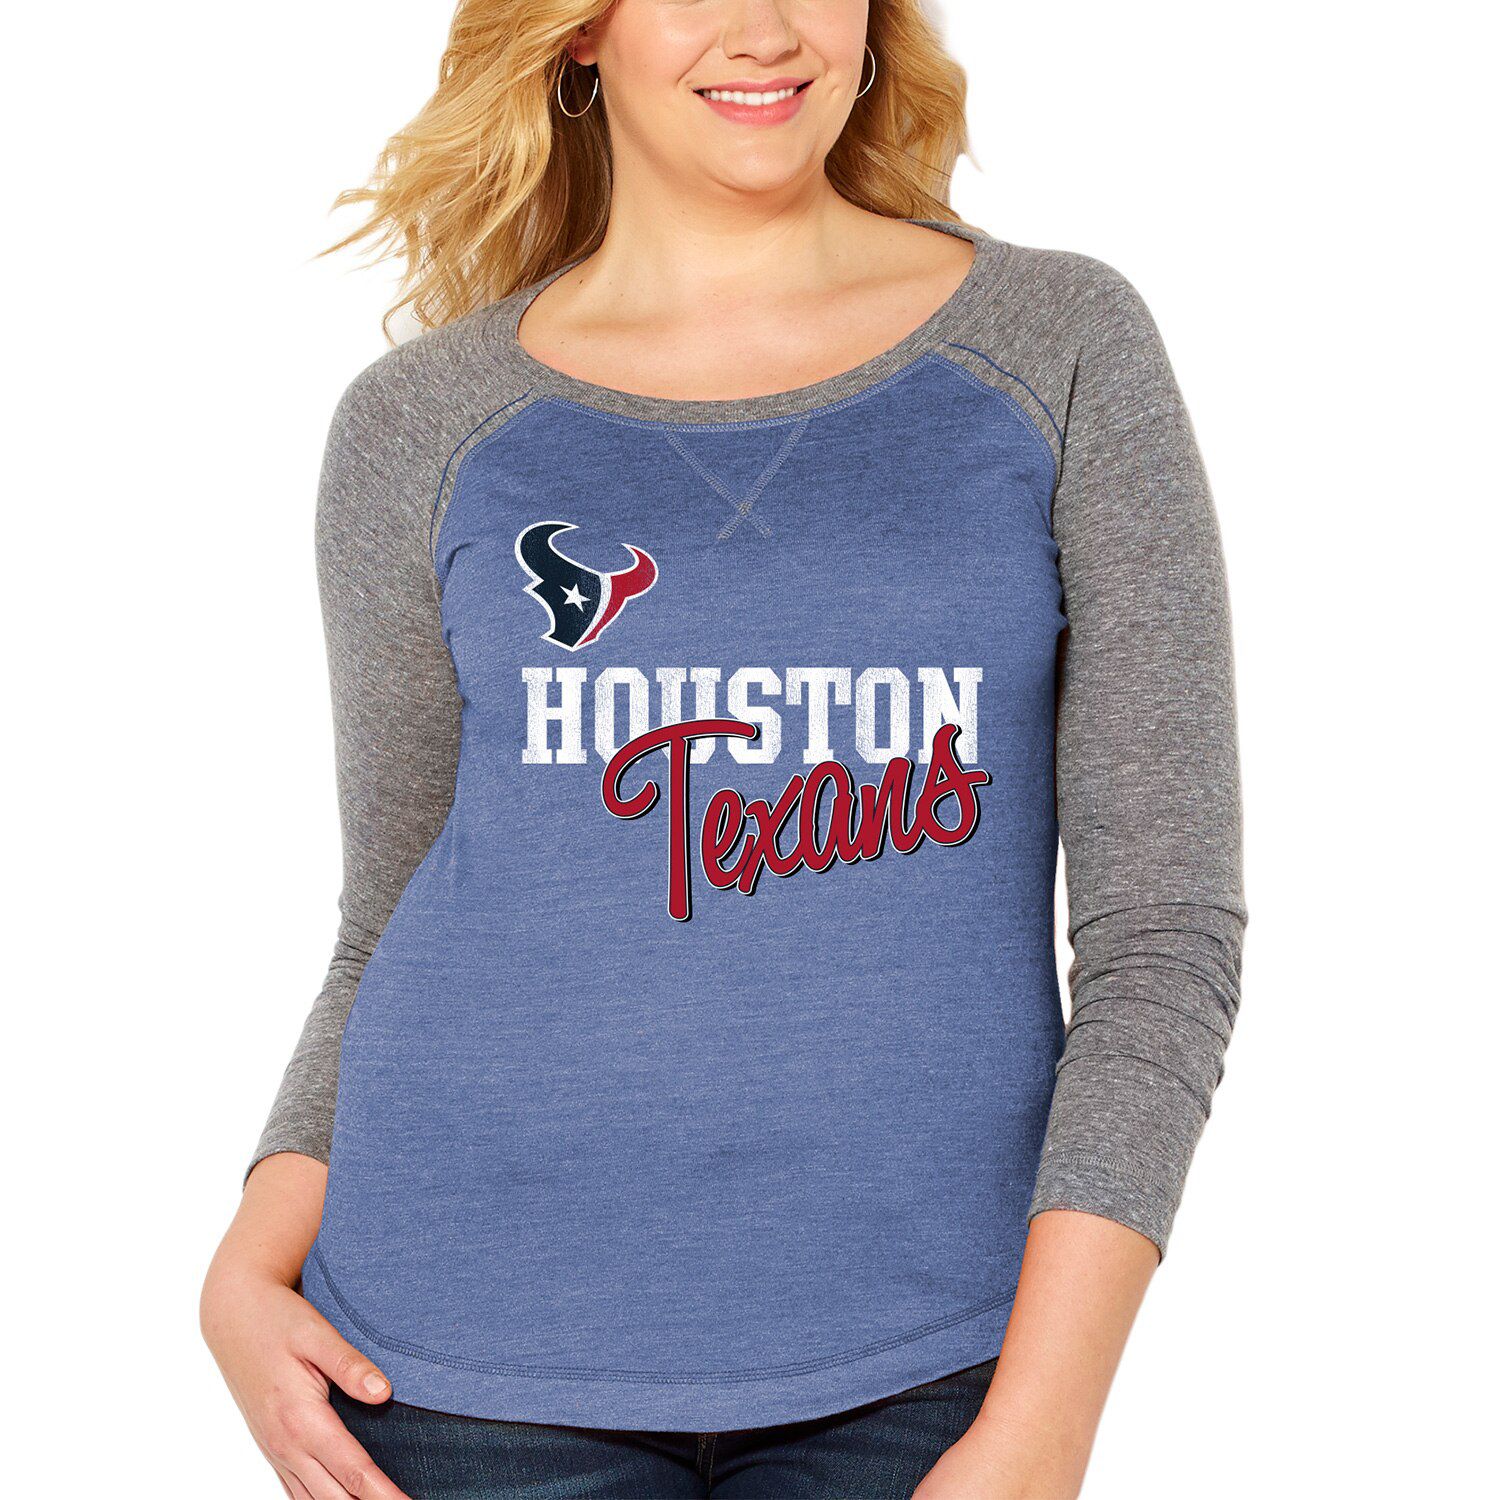 houston texans women's long sleeve shirts